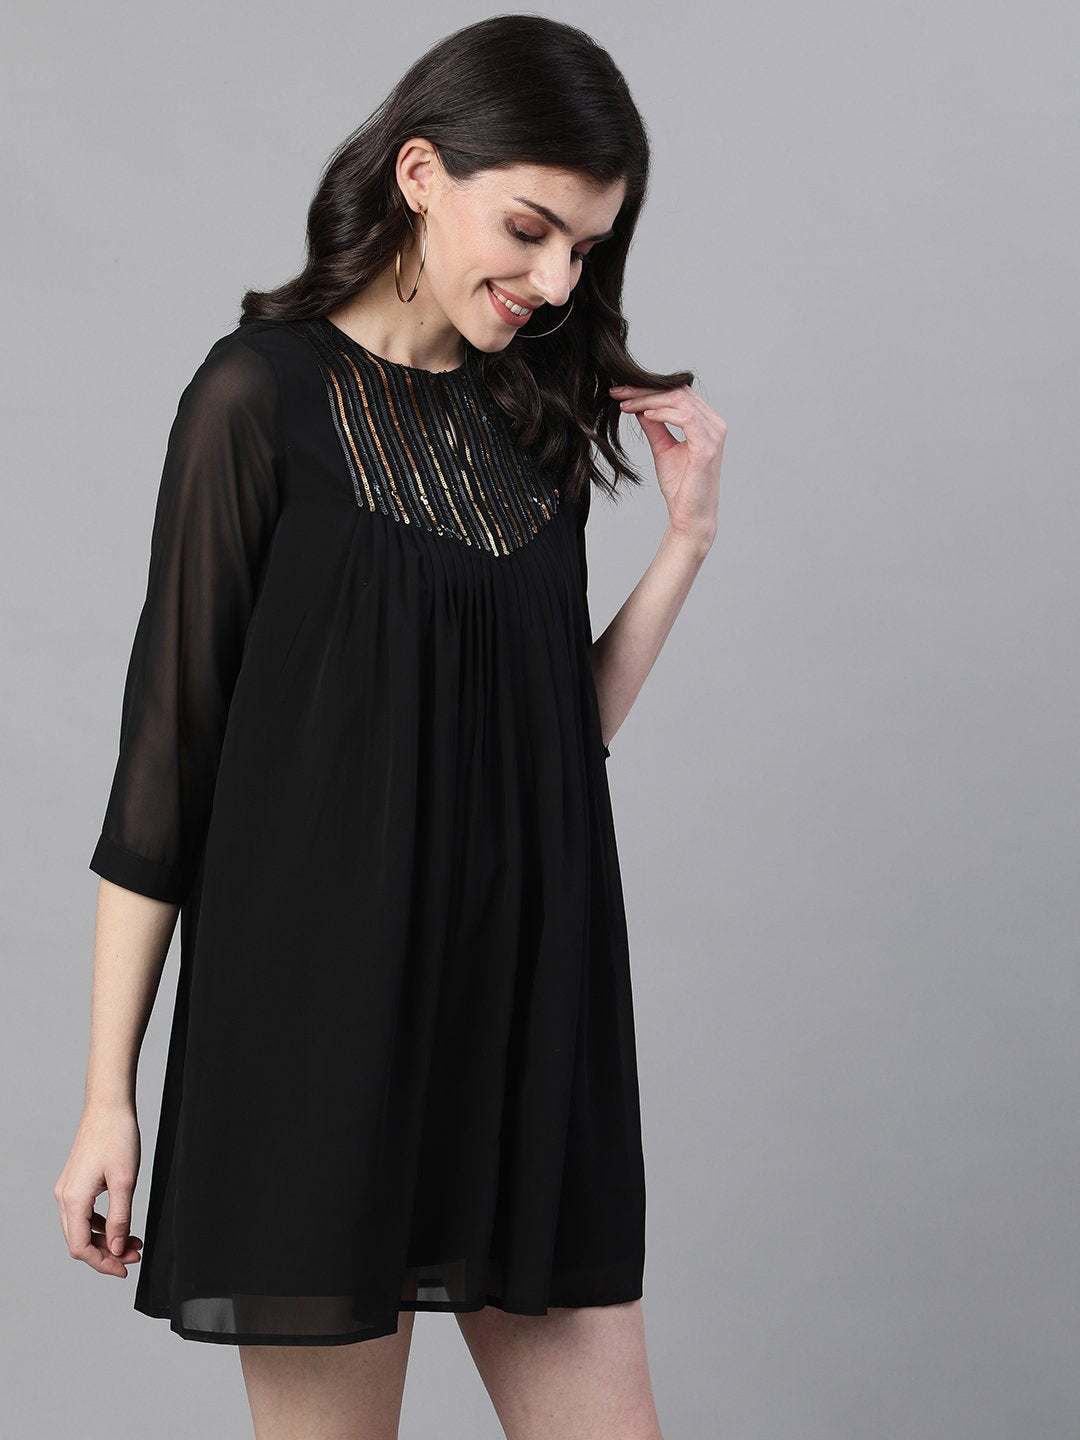 Ishin Women's Poly Georgette Black Embellished A-Line Dress